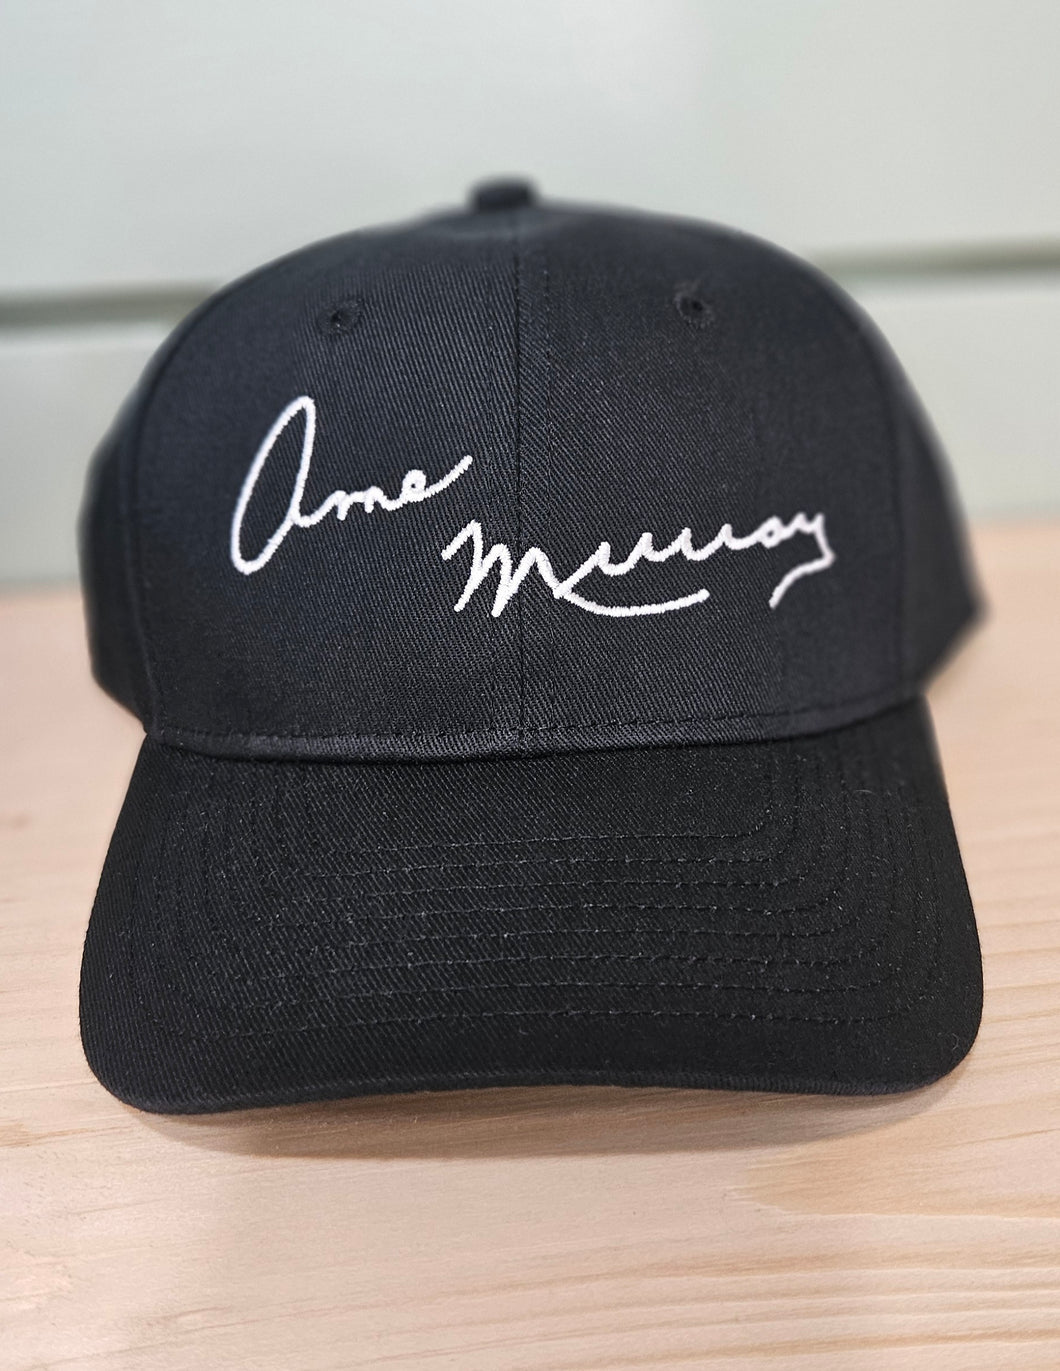 Anne Murray Signature Ball Cap